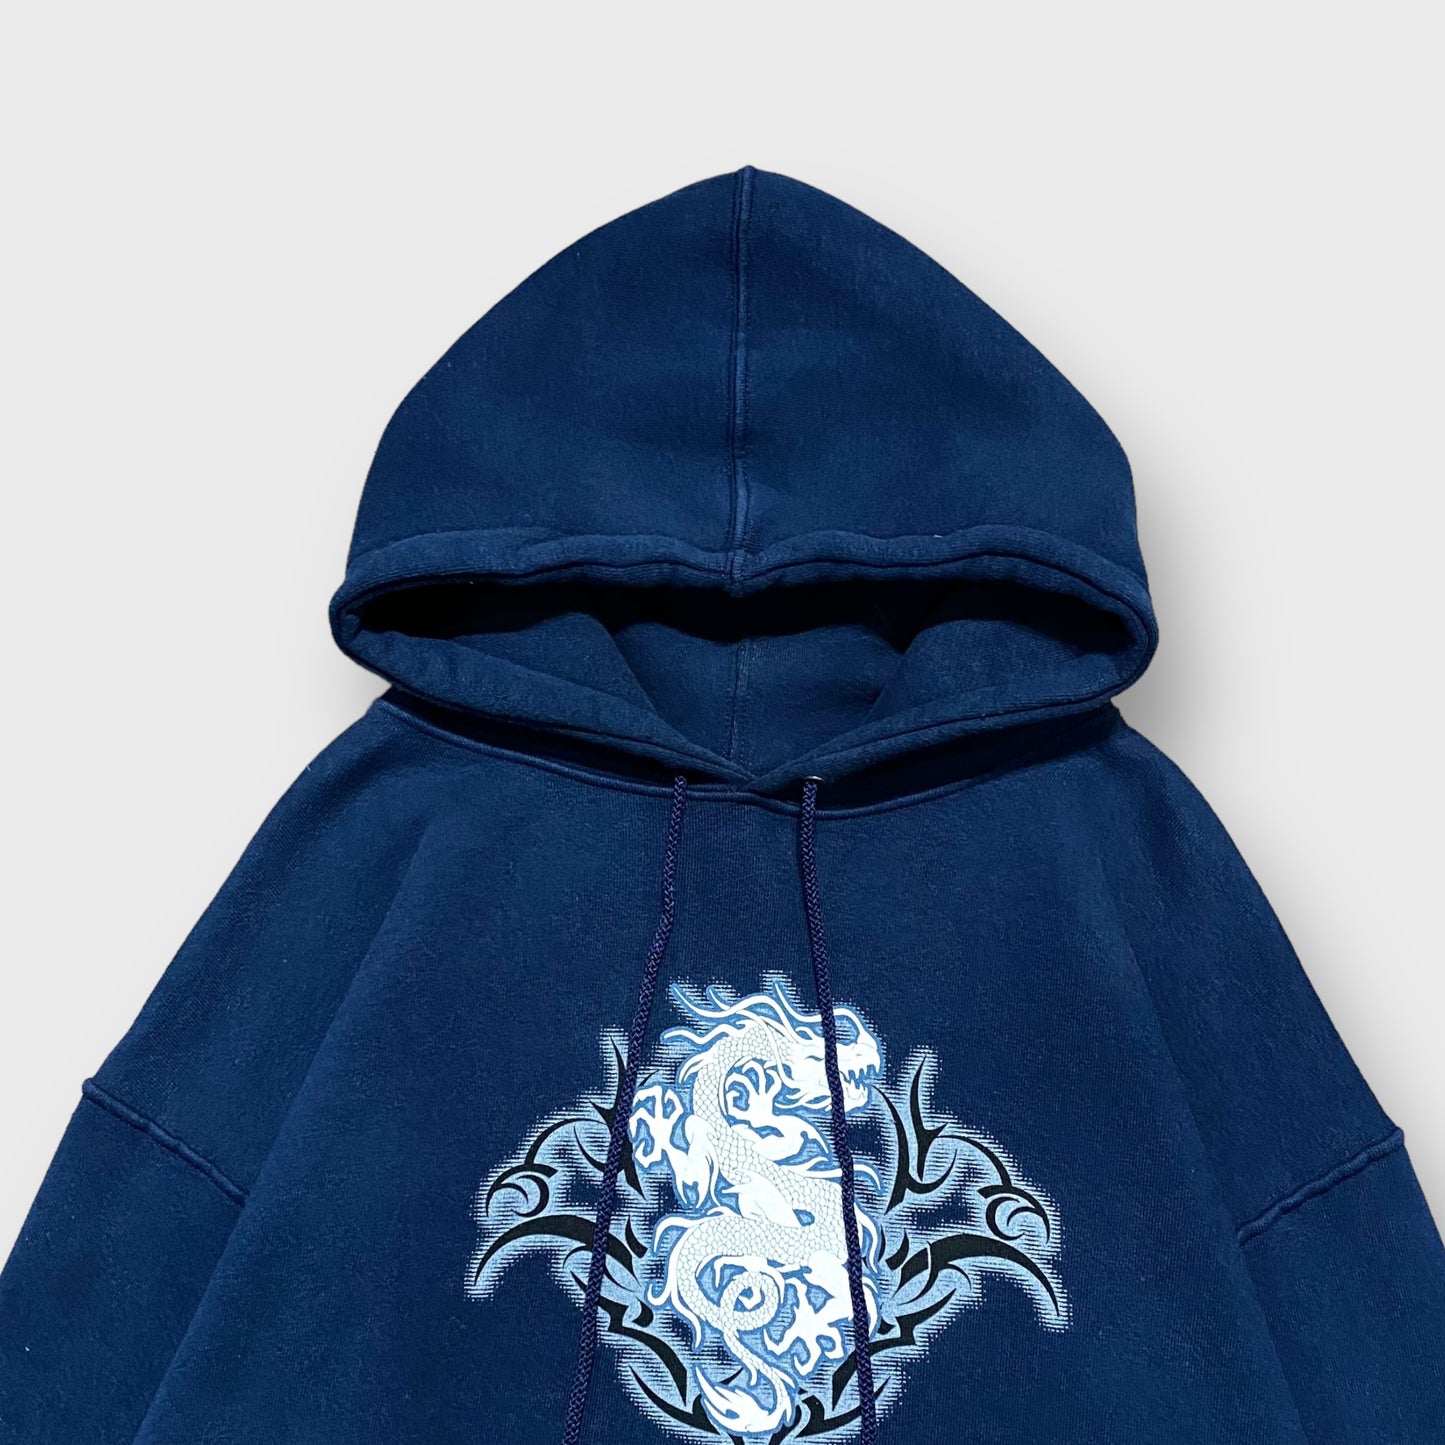 Tribal dragon design hoodie